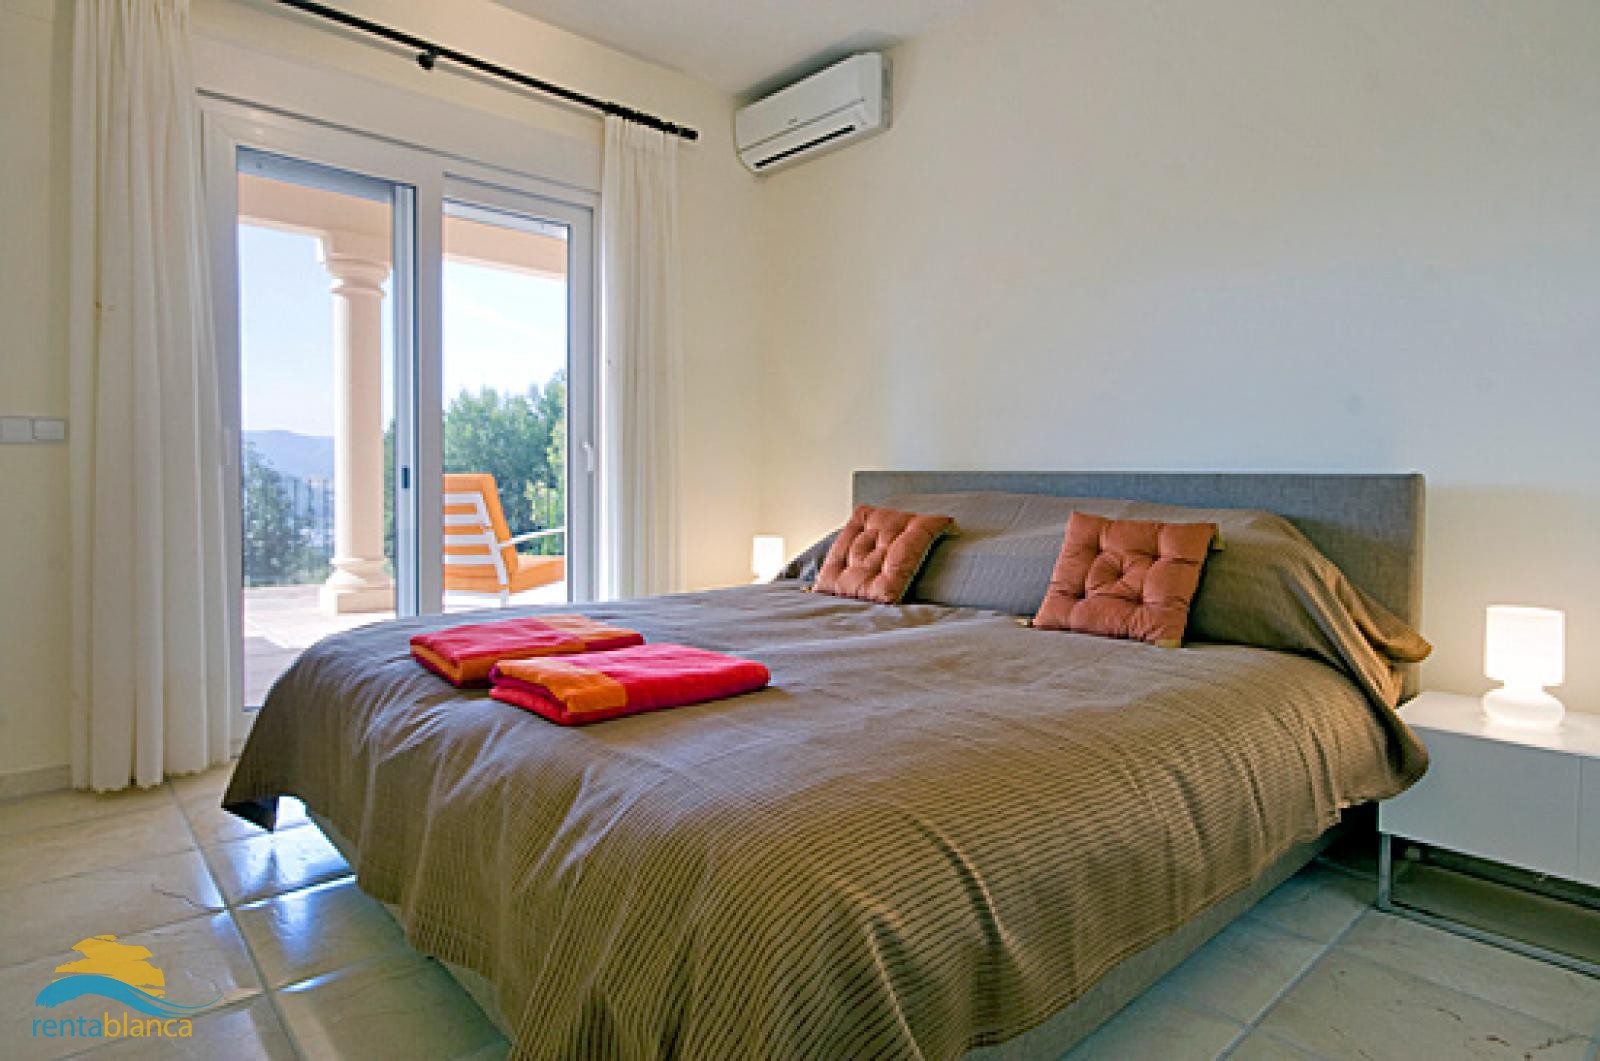 Luxurious villa gof paradise La Sella - Denia - Rentablanca